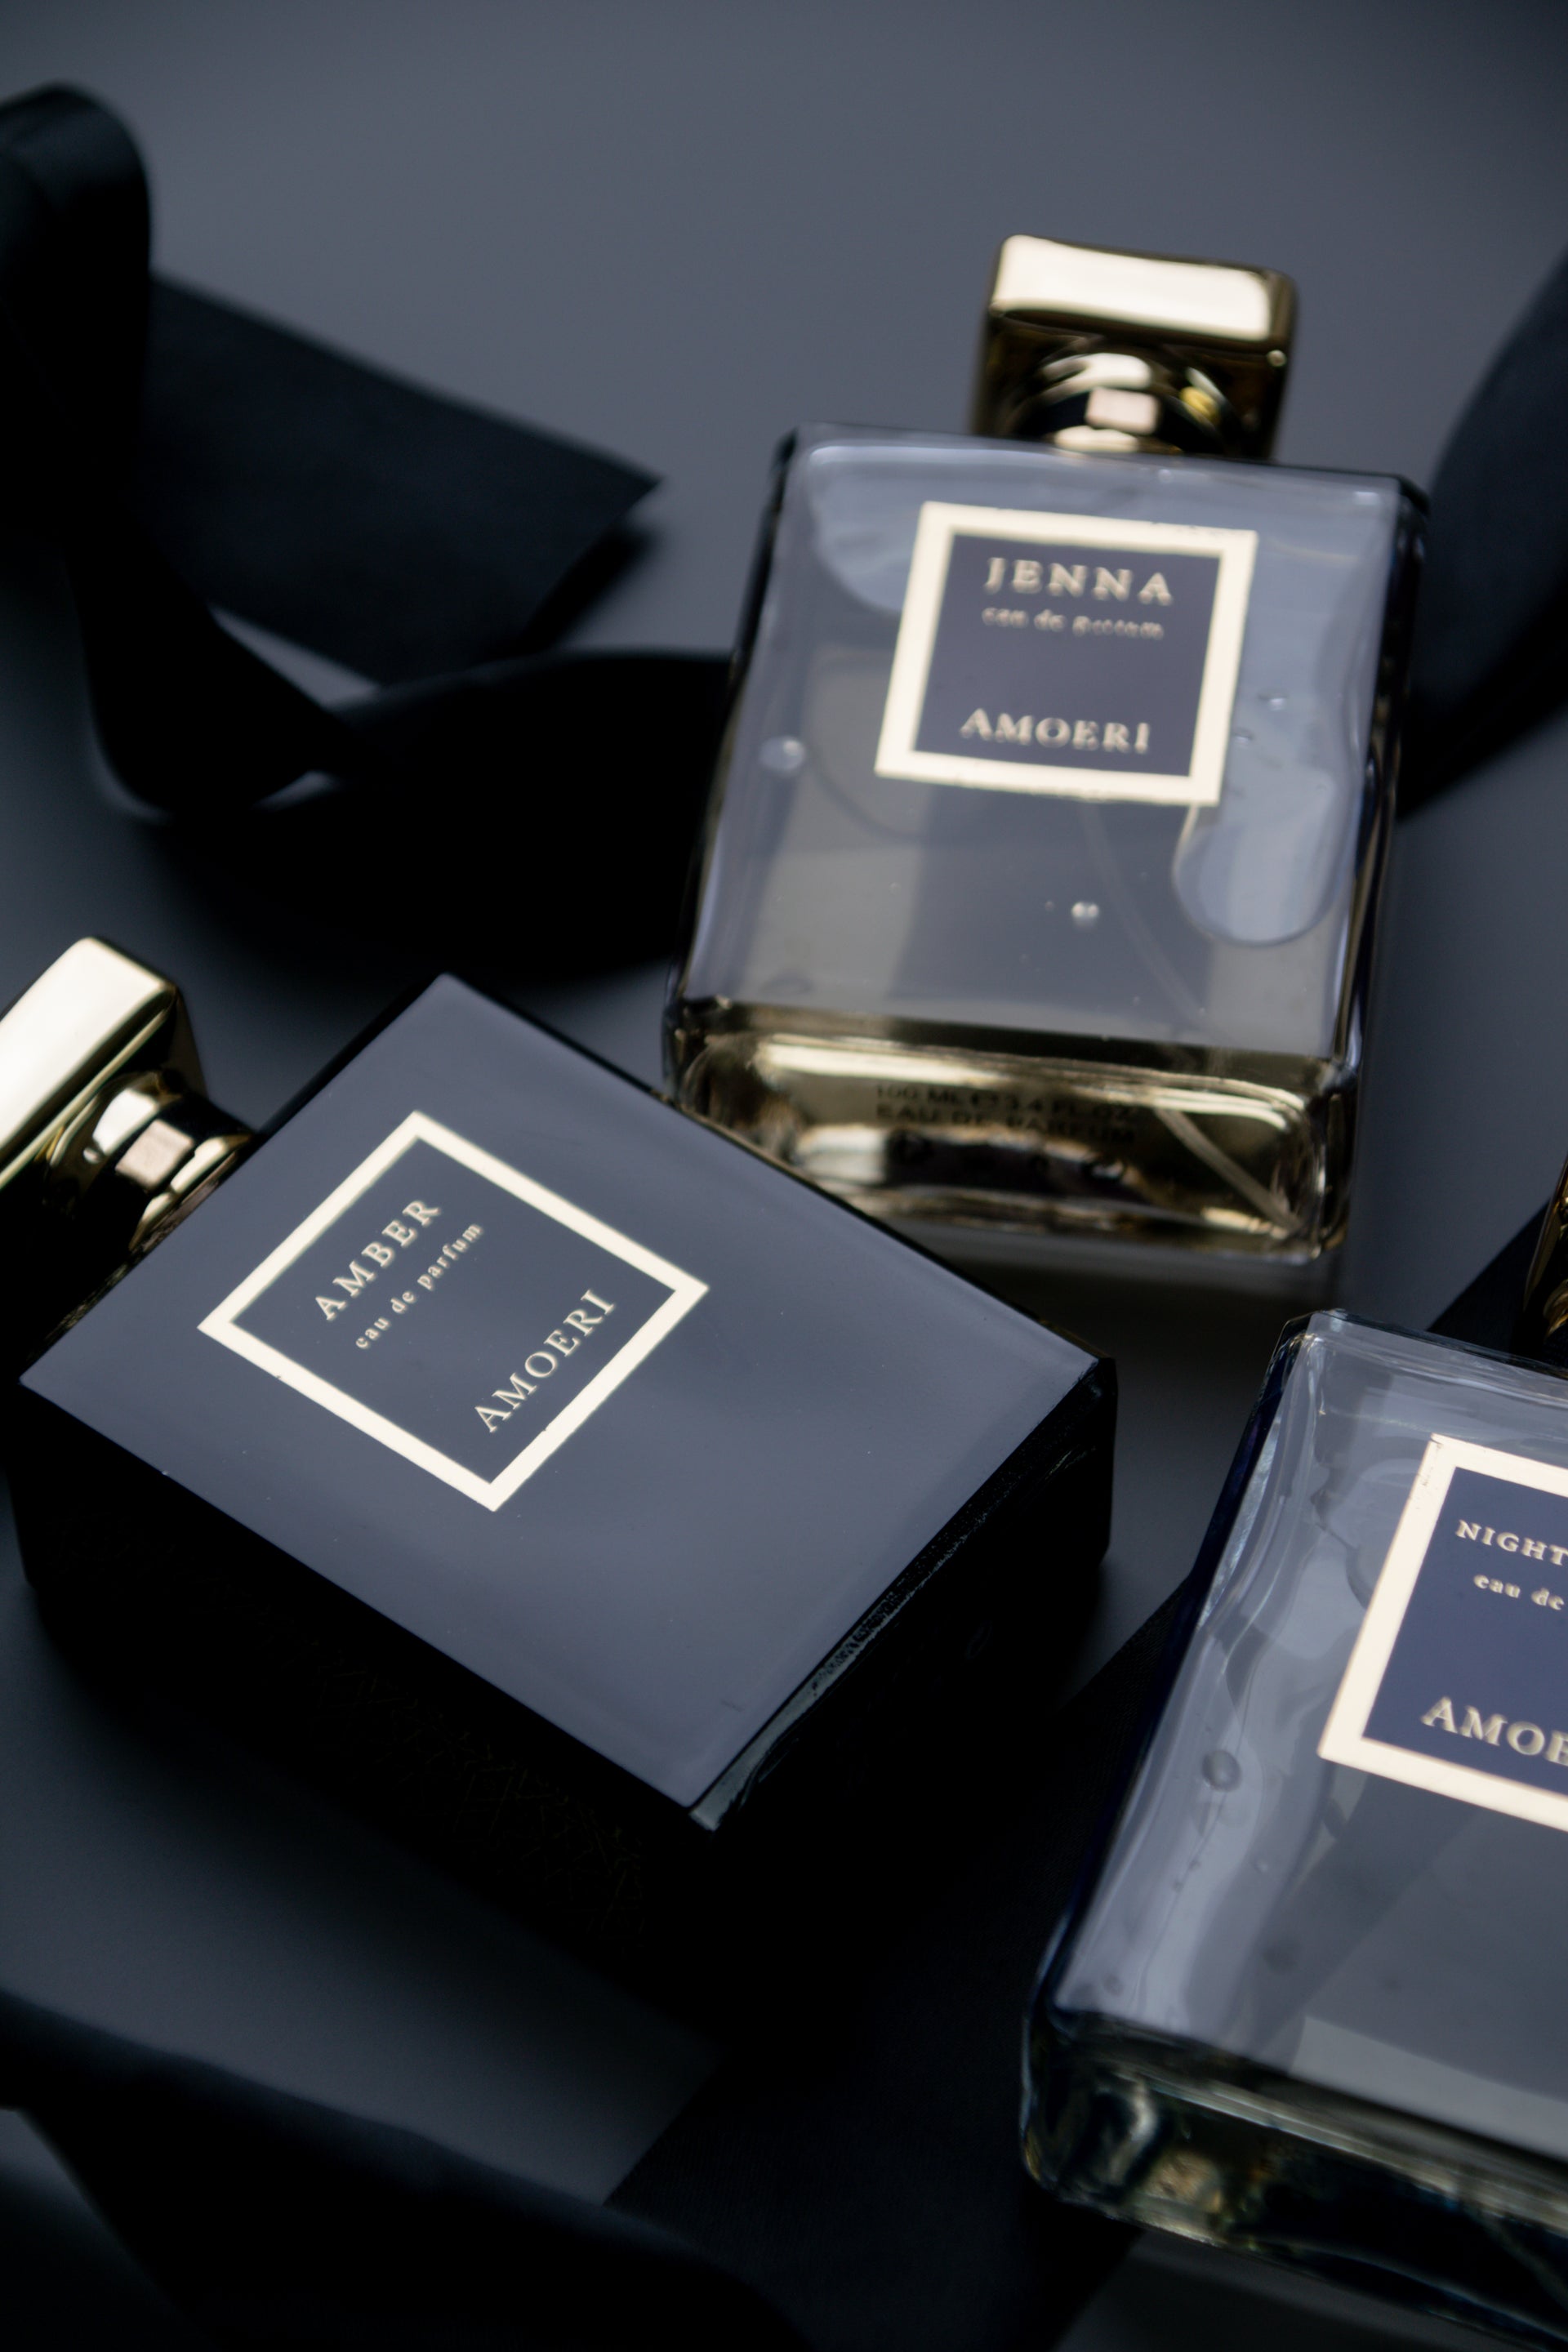 Eau de Parfum Amoeri 4 soorten geuren